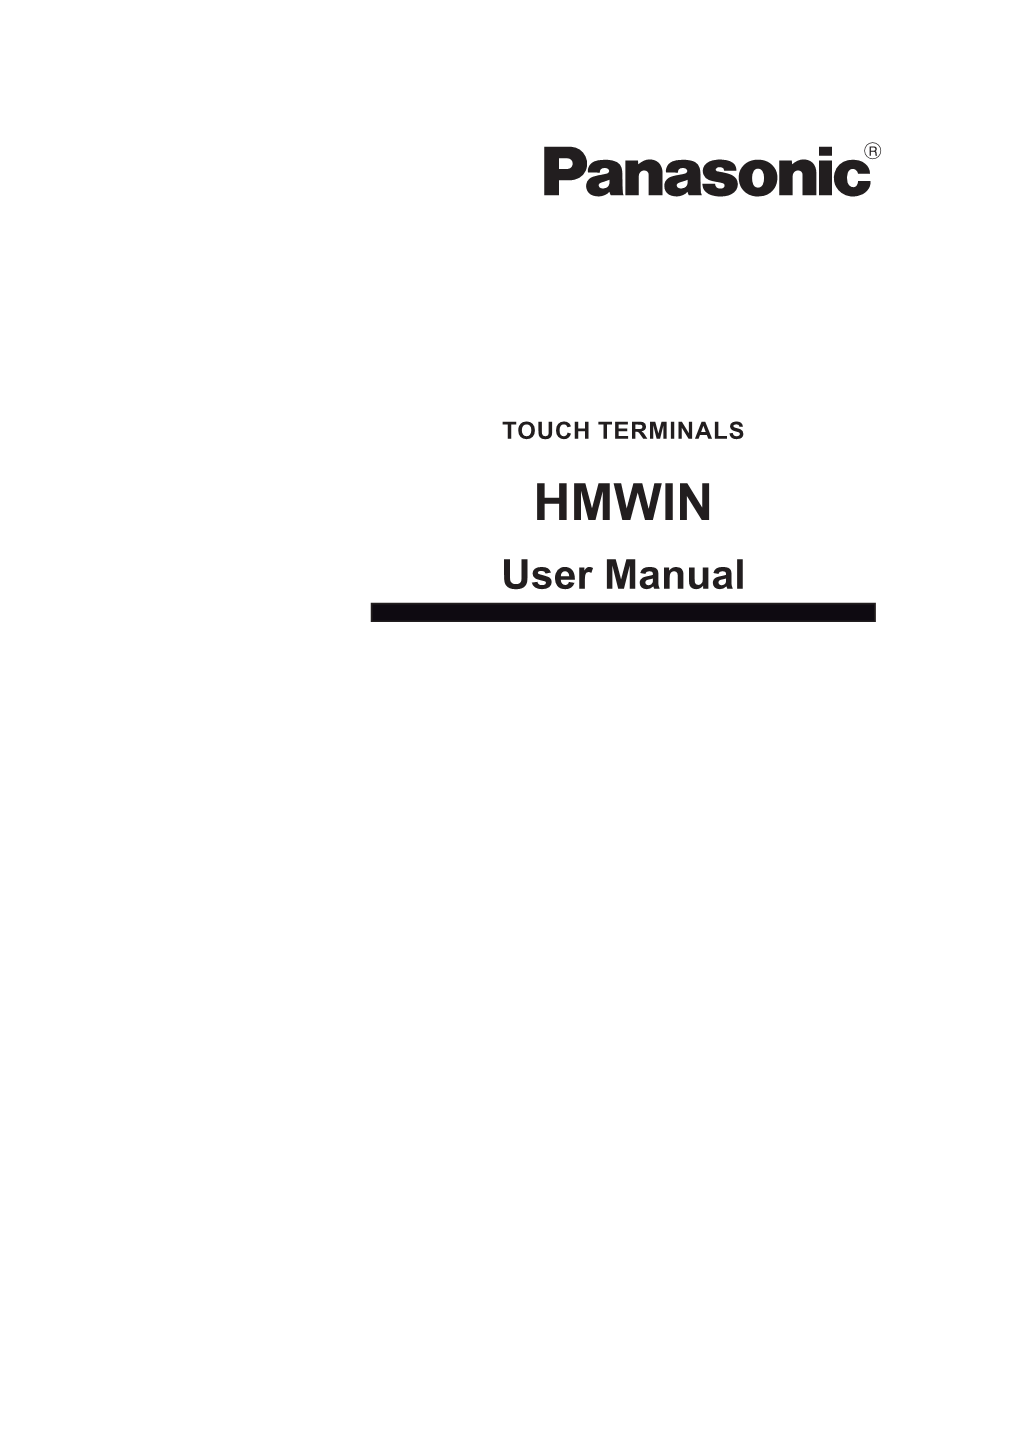 HMWIN User Manual